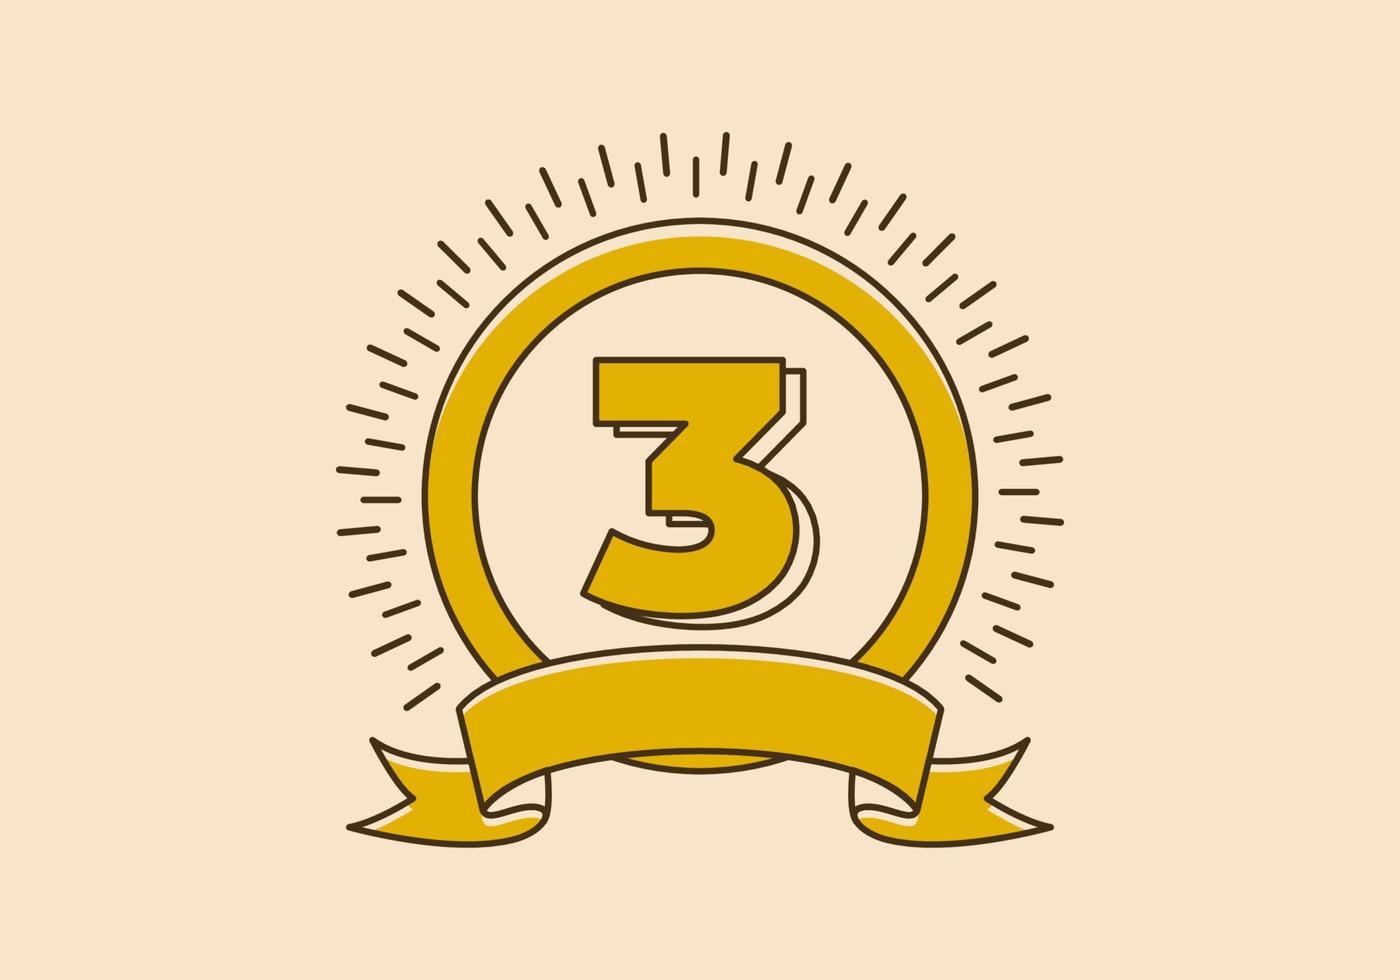 distintivo de círculo amarelo vintage com o número 3 nele vetor